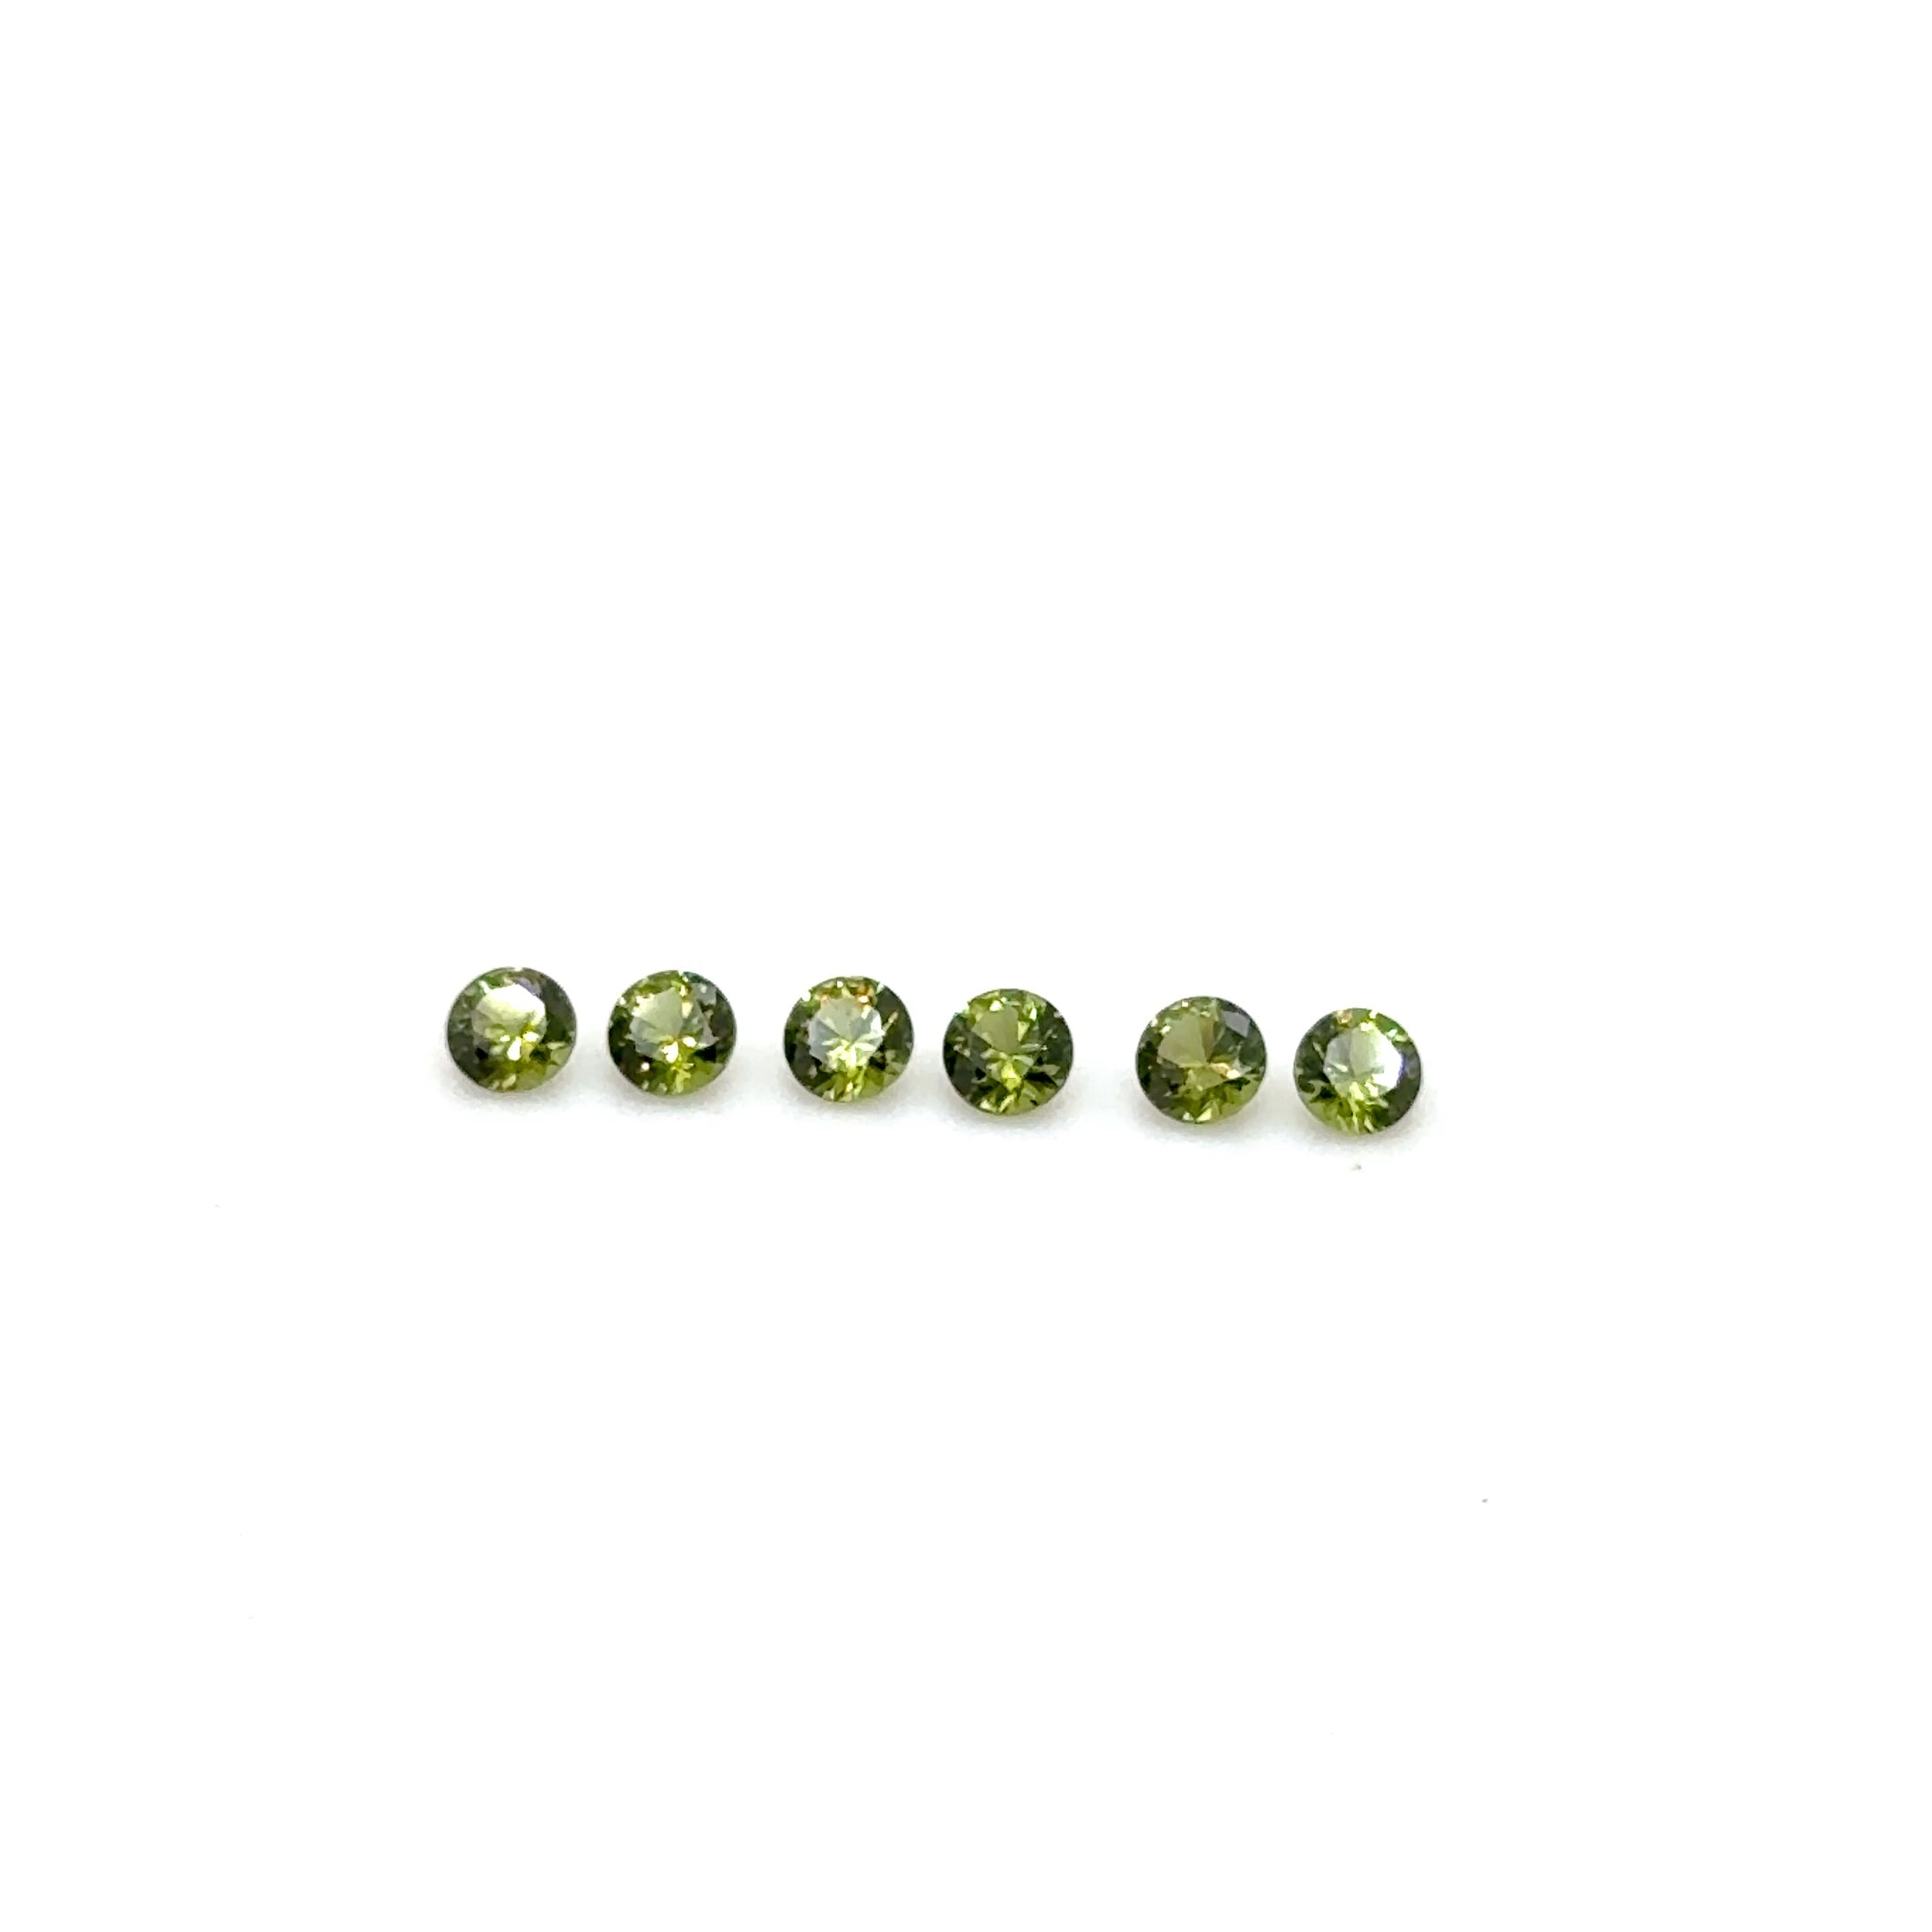 Green Zircon Gemstone; Natural Untreated Sri Lanka Zircon, 0.805cts - Mark Oliver Gems